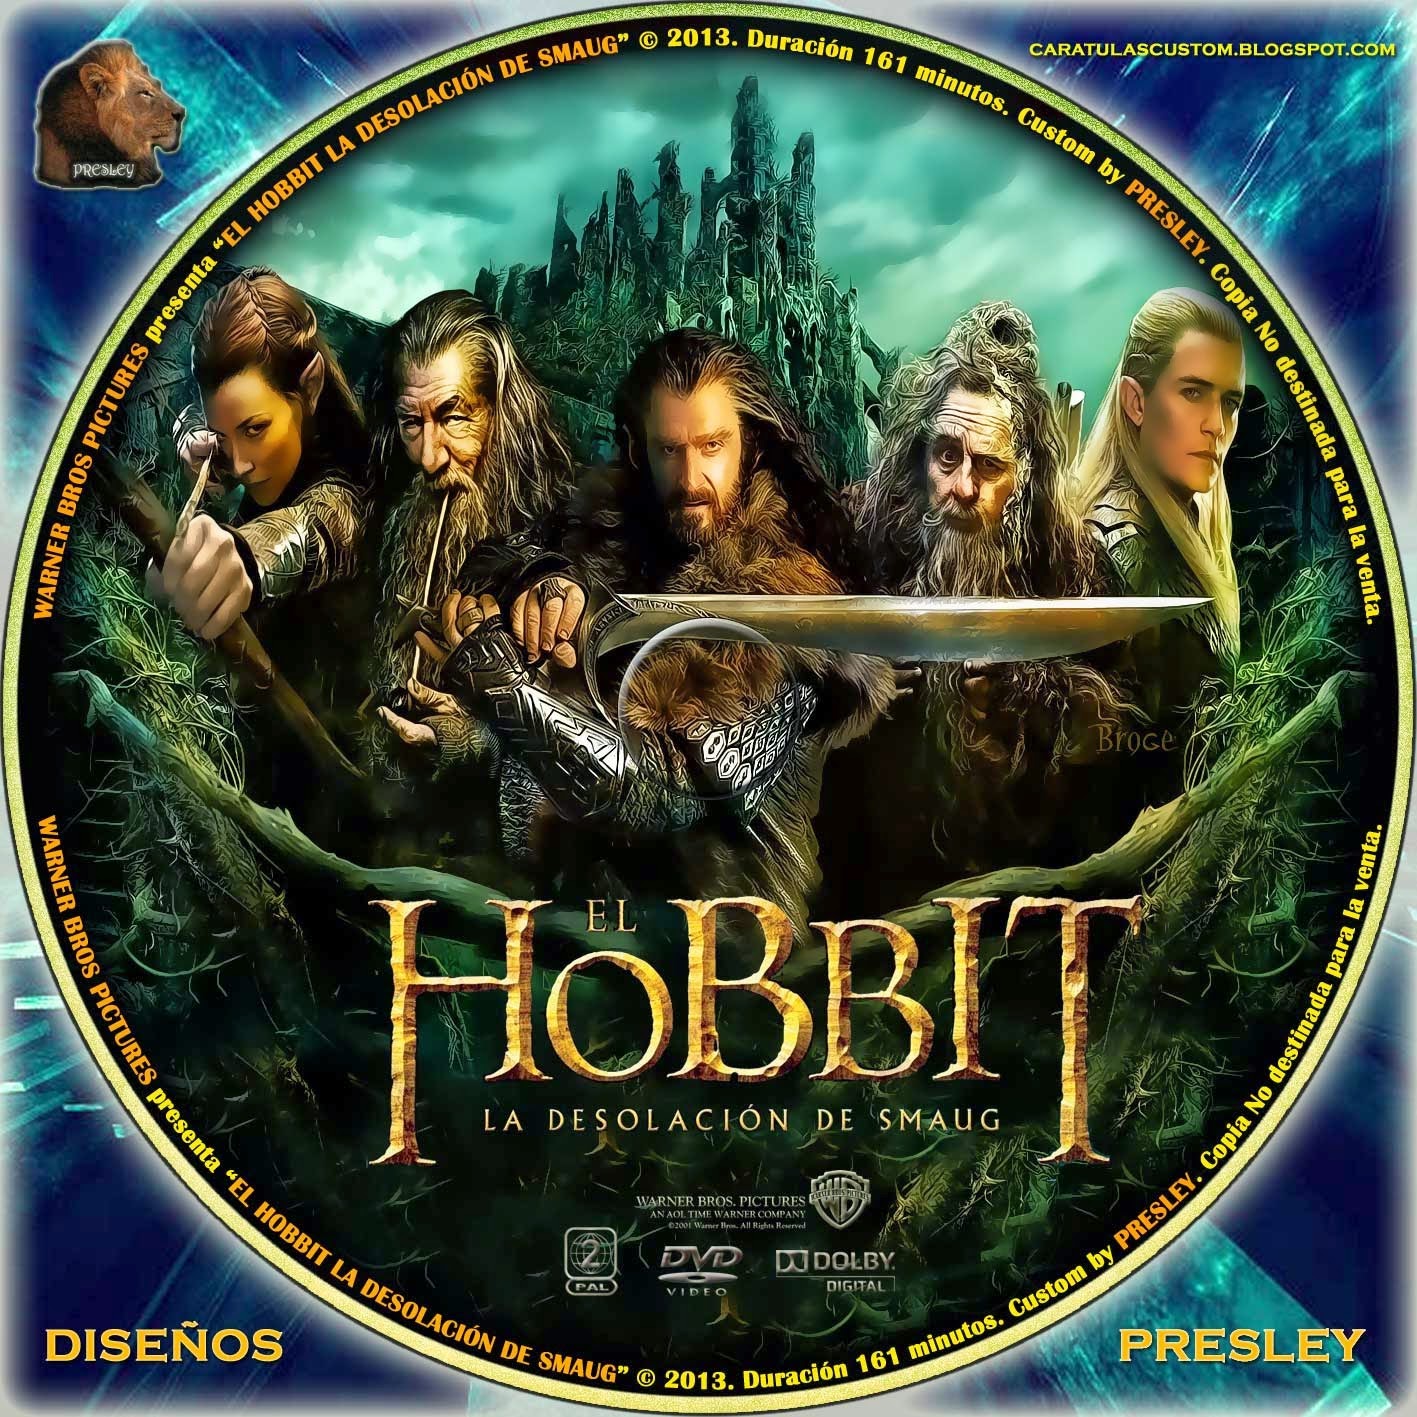 Ver El Hobbit 2 Online Ingles Subtitulada pelicula